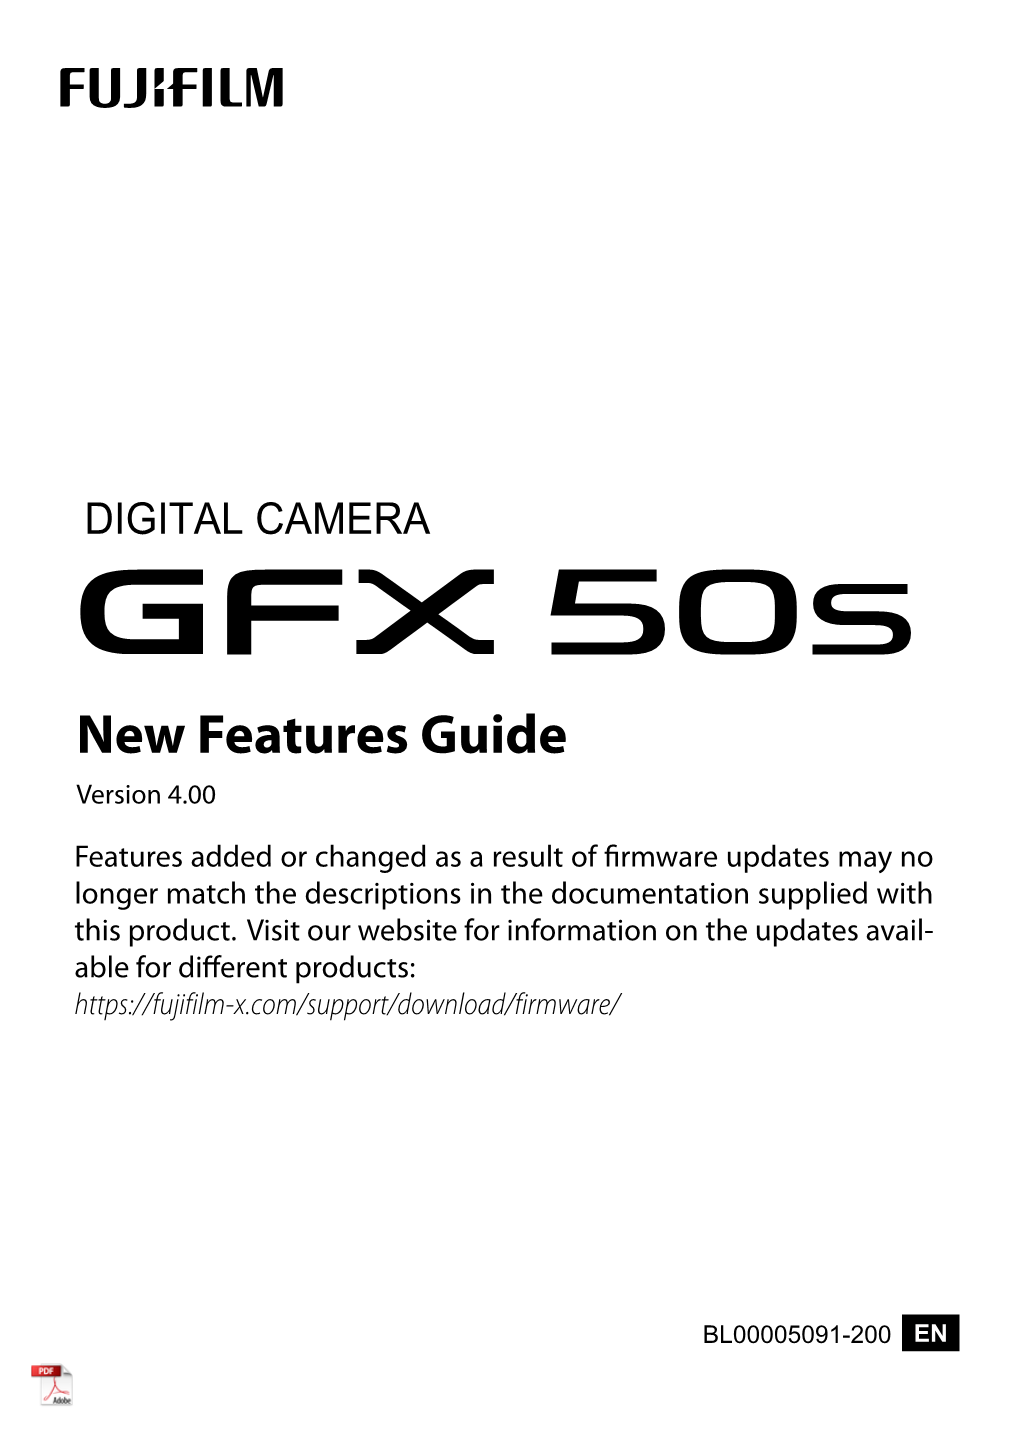 FUJIFILM GFX 50S Digital Camera User Guide